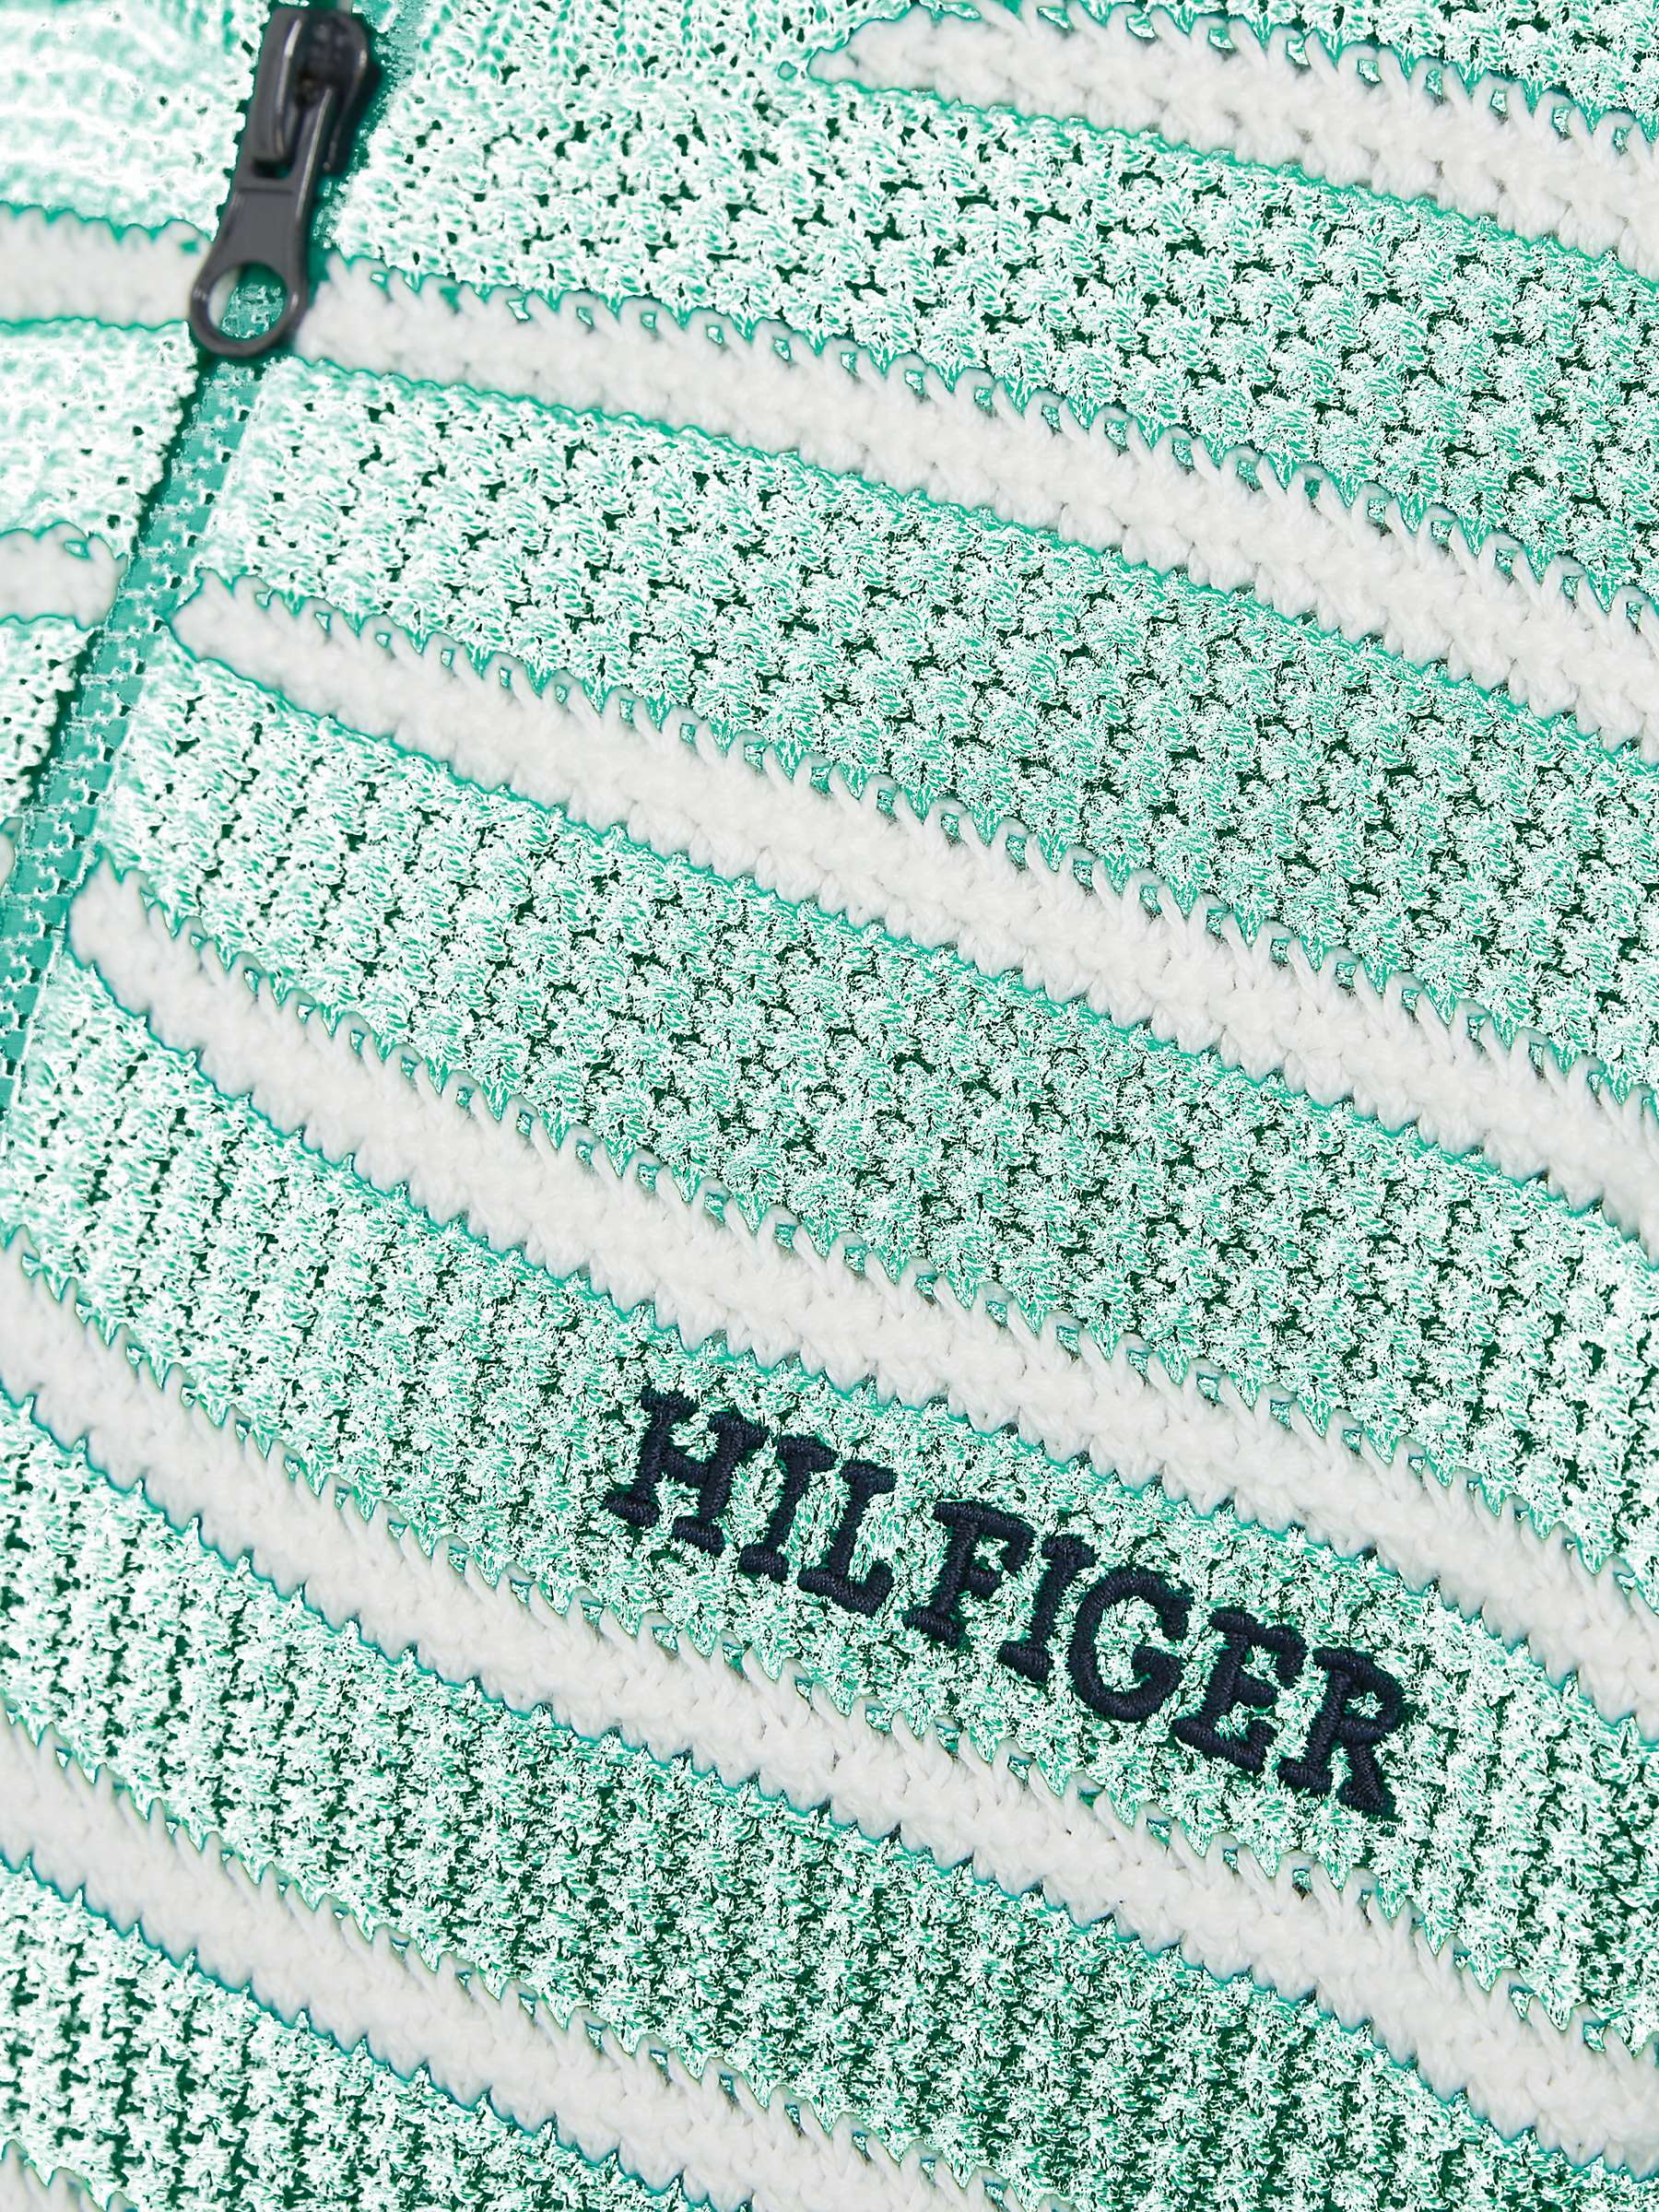 Buy Tommy Hilfiger Kids' Half Zip Stripe Jumper, Green/Ecru Stripe Online at johnlewis.com